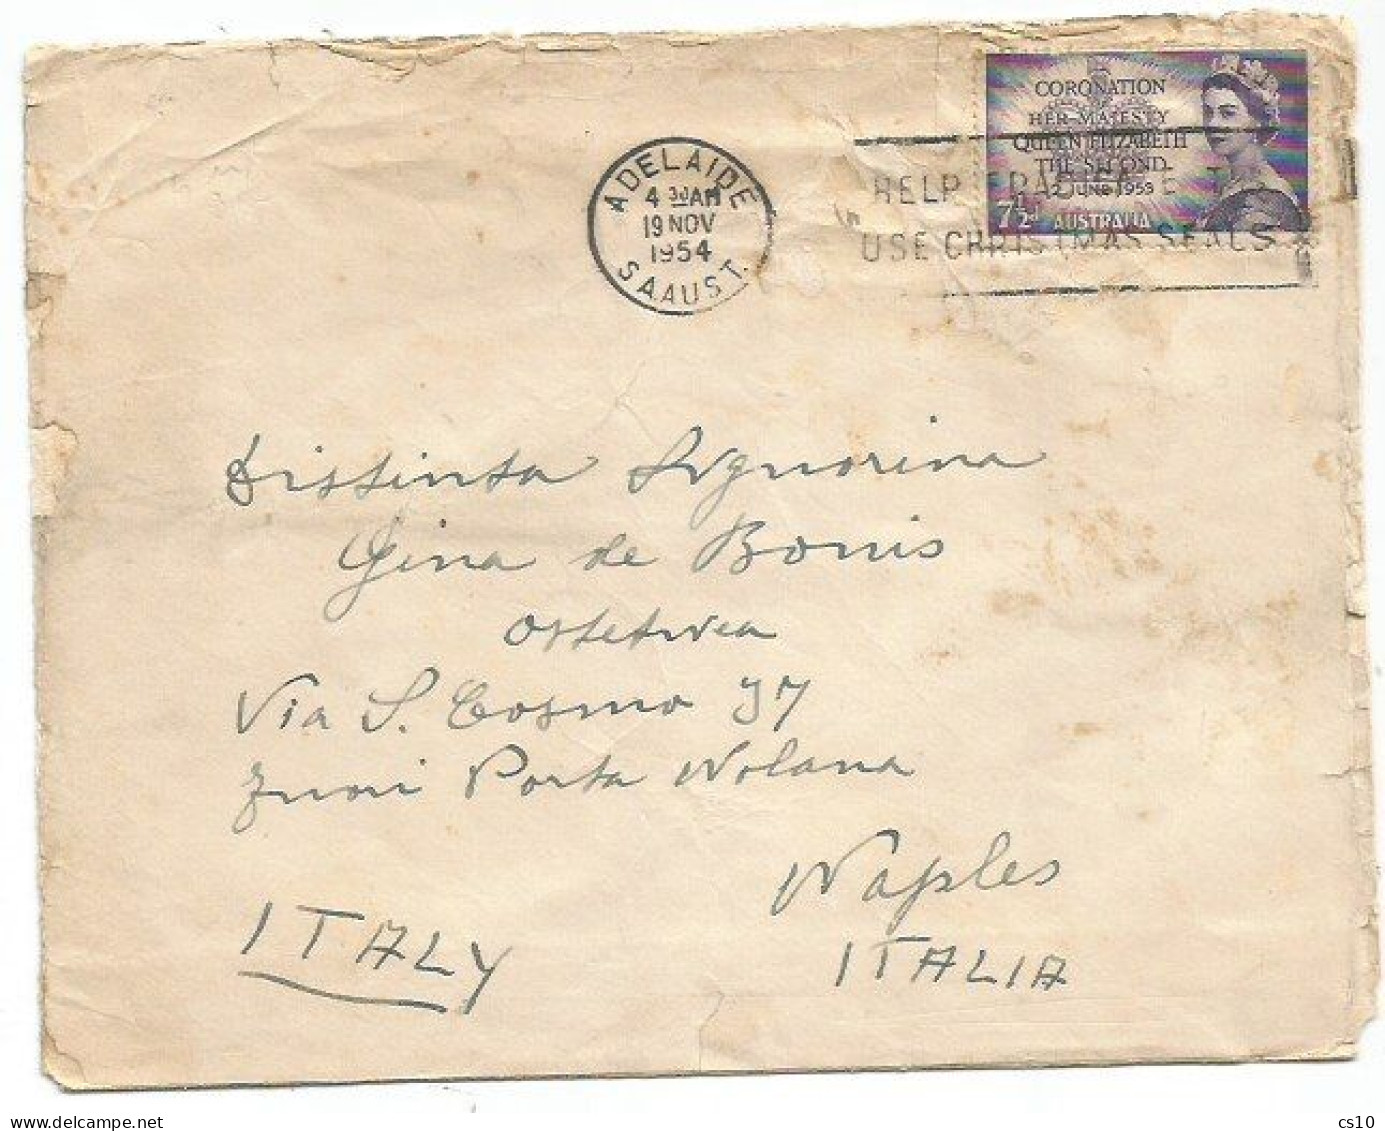 Australia Coronation Day 1953 D.7.1/2 Solo Franking AirmailCV Adelaide 19nov1954 To Italy - Cartas & Documentos